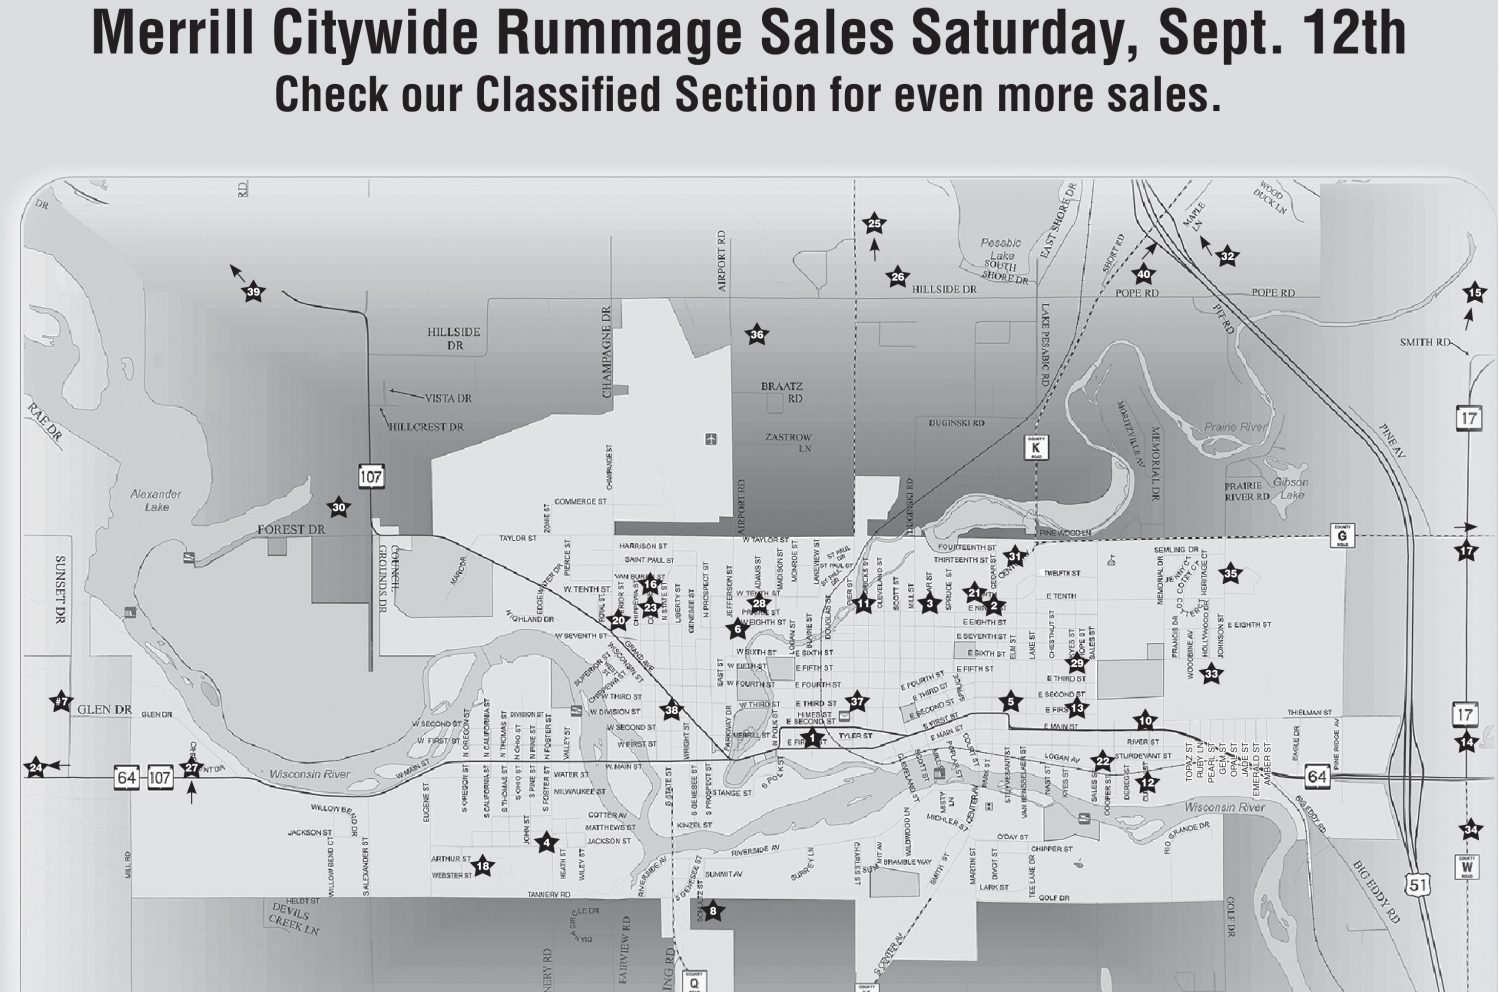 Merrill Citywide Rummage Sales: Saturday, Sept. 11